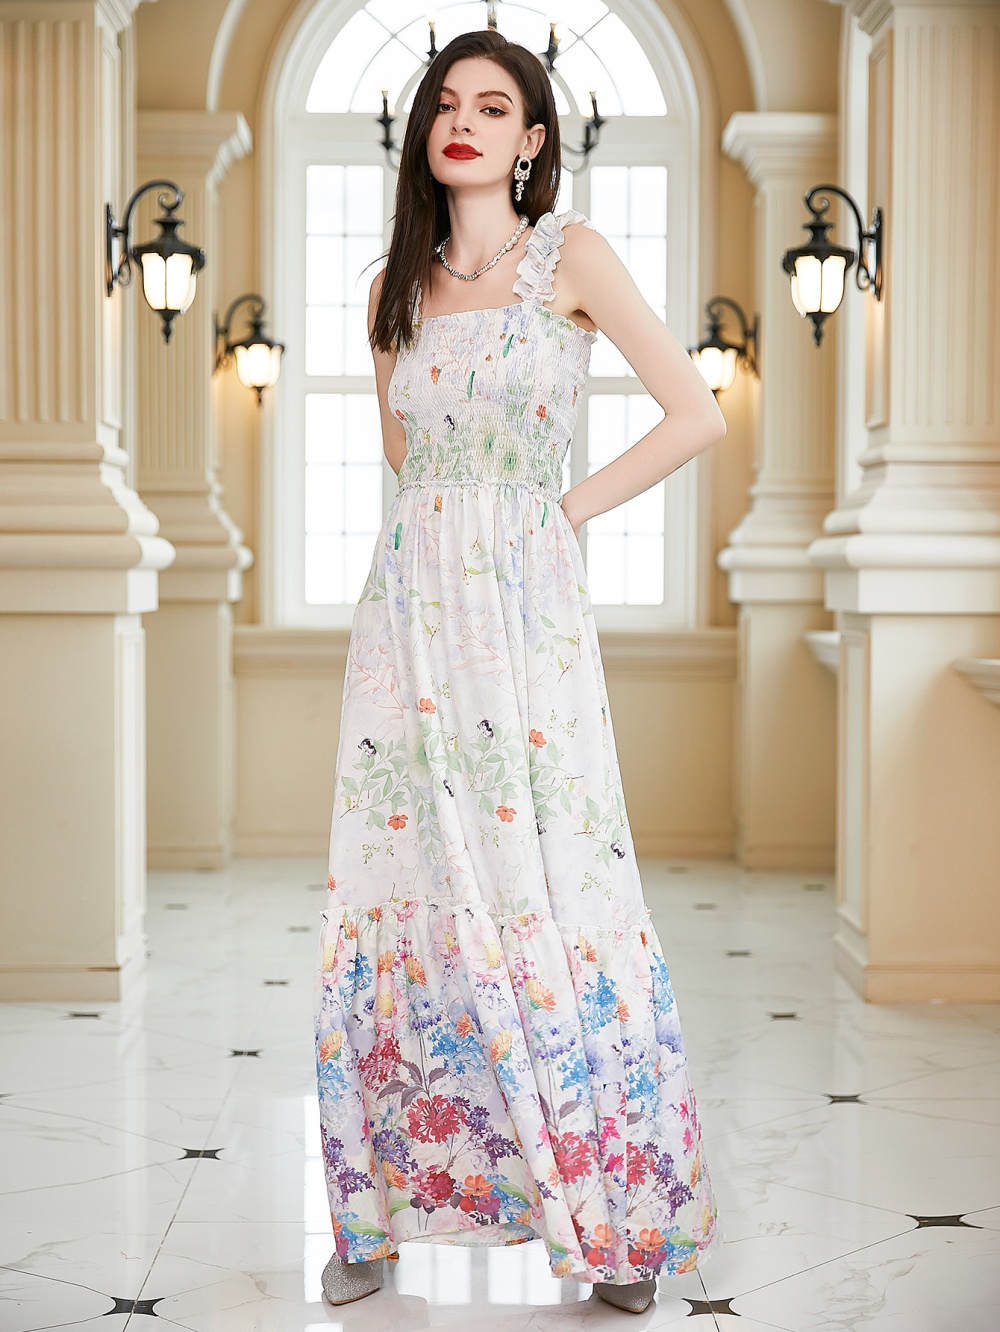 Spring and summer formal dress printing dress